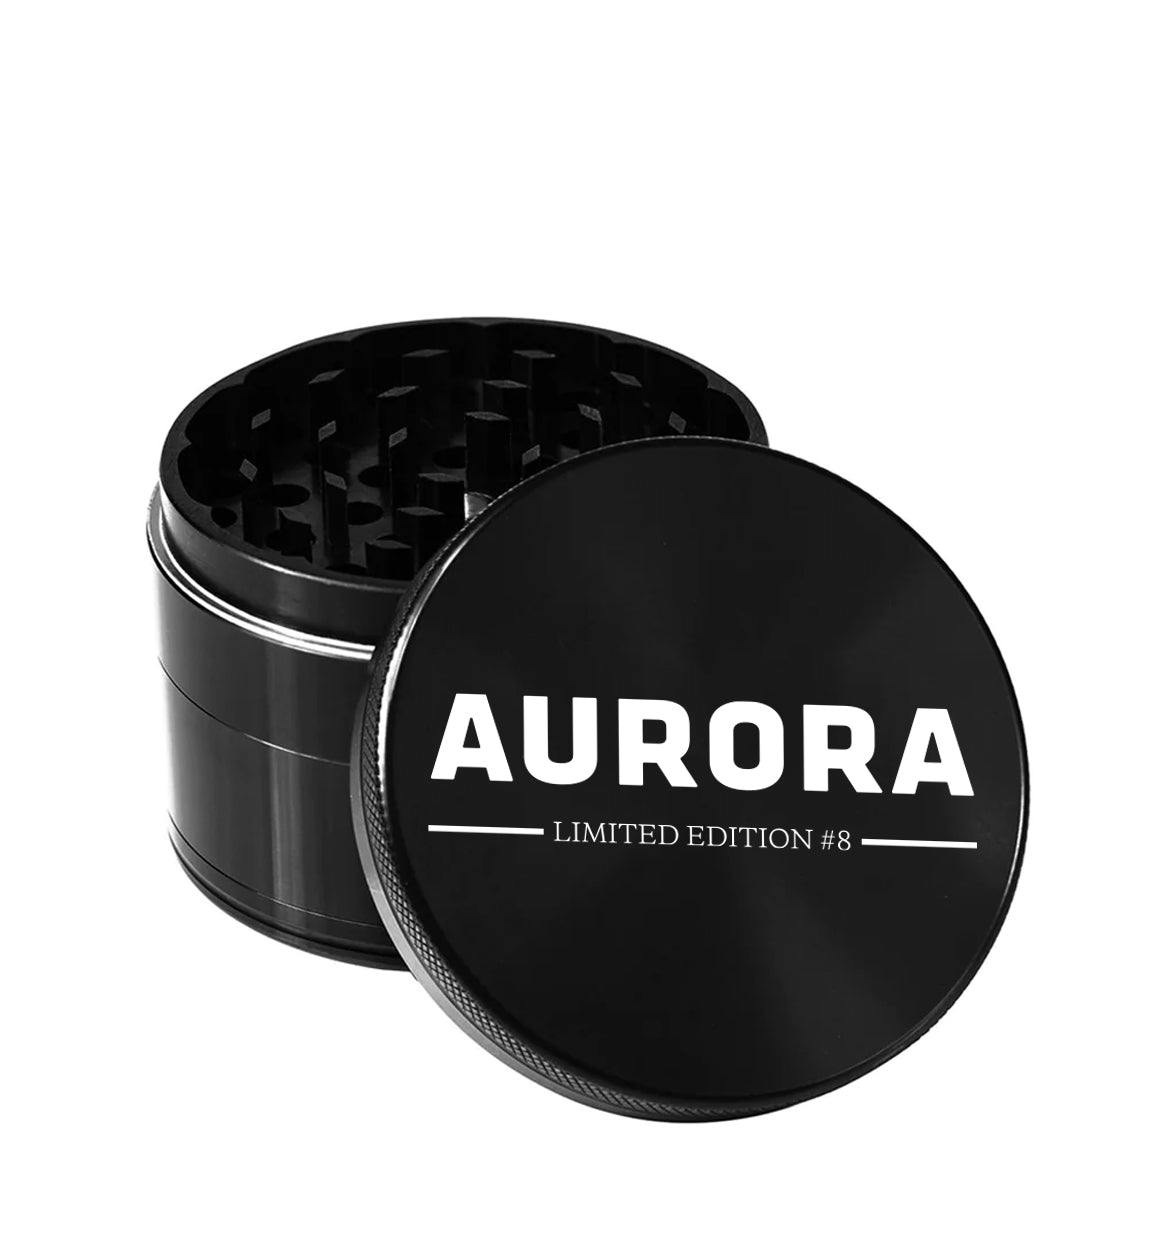 Collector Item #8 – Limited Edition Aurora Grinder - $0